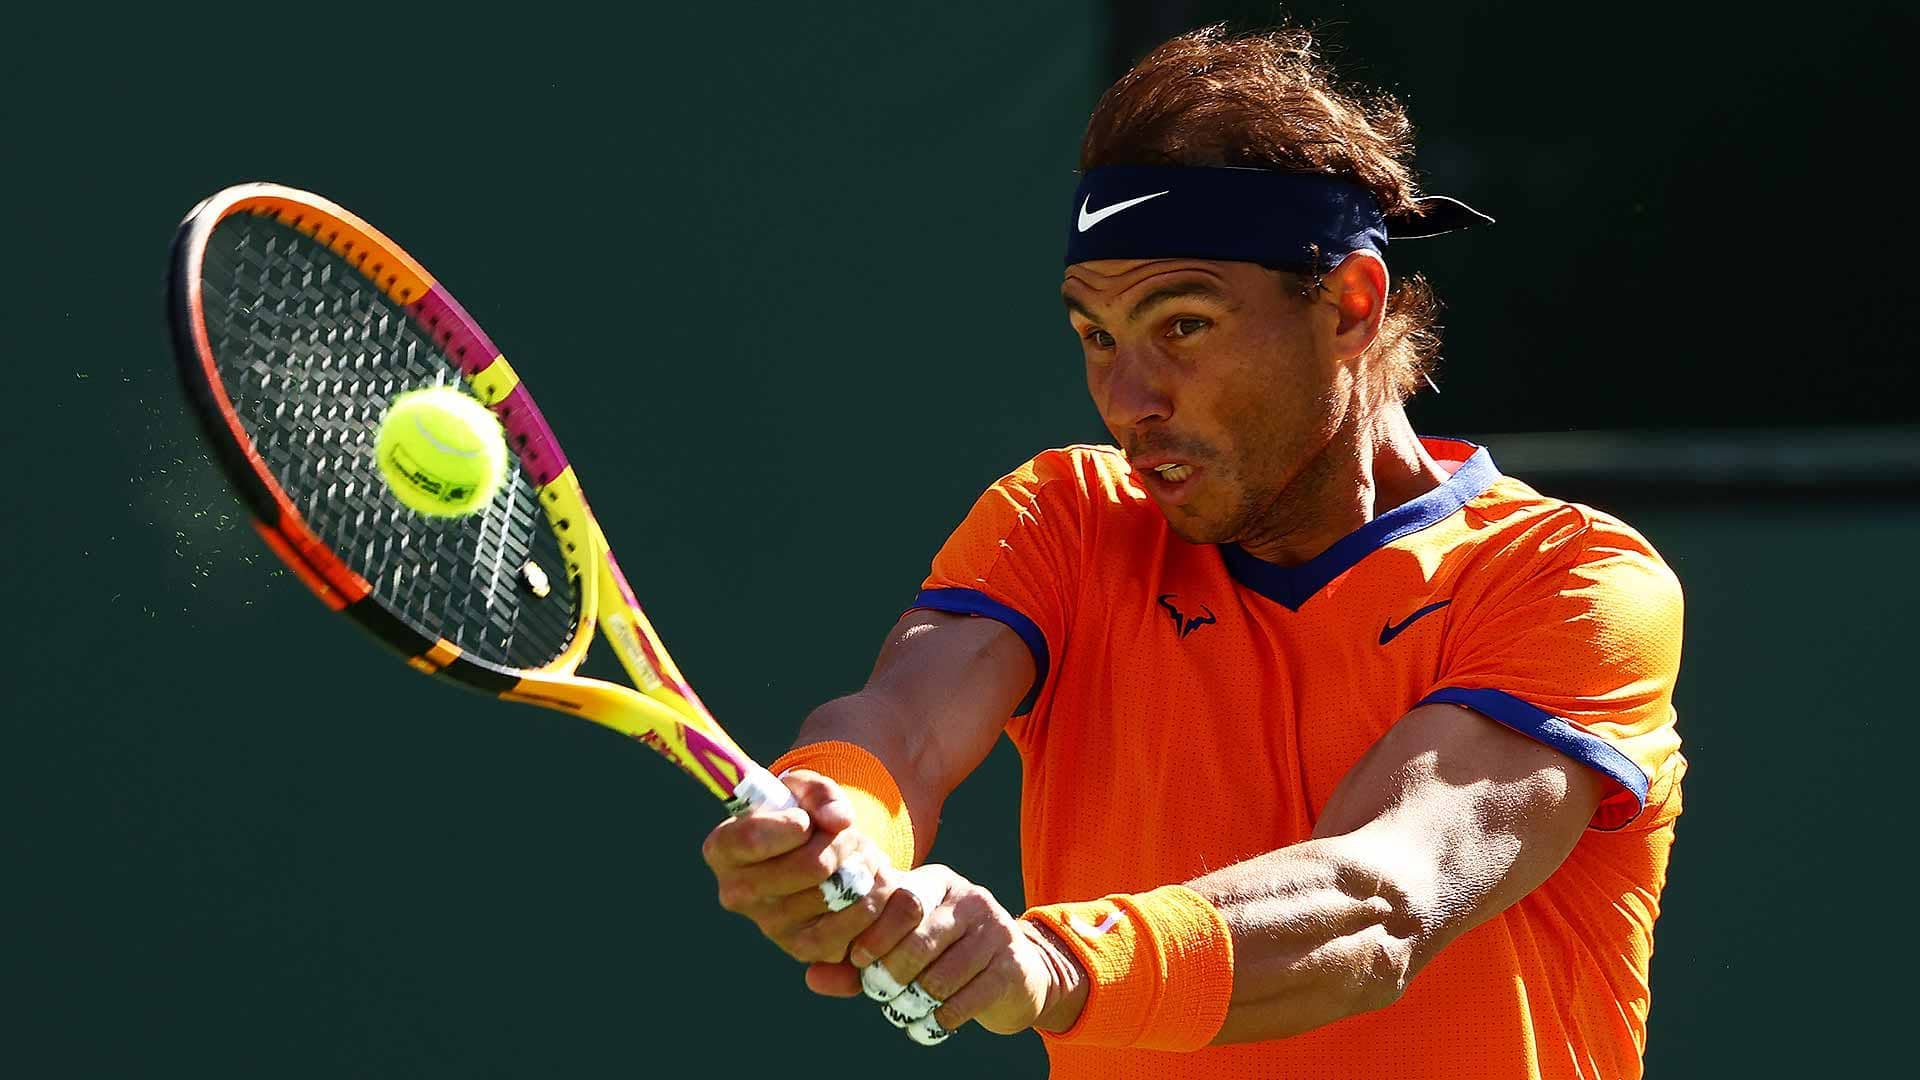 Rafael Nadal to combat Milos Raonic threat in Indian Wells opener, ATP  Tour